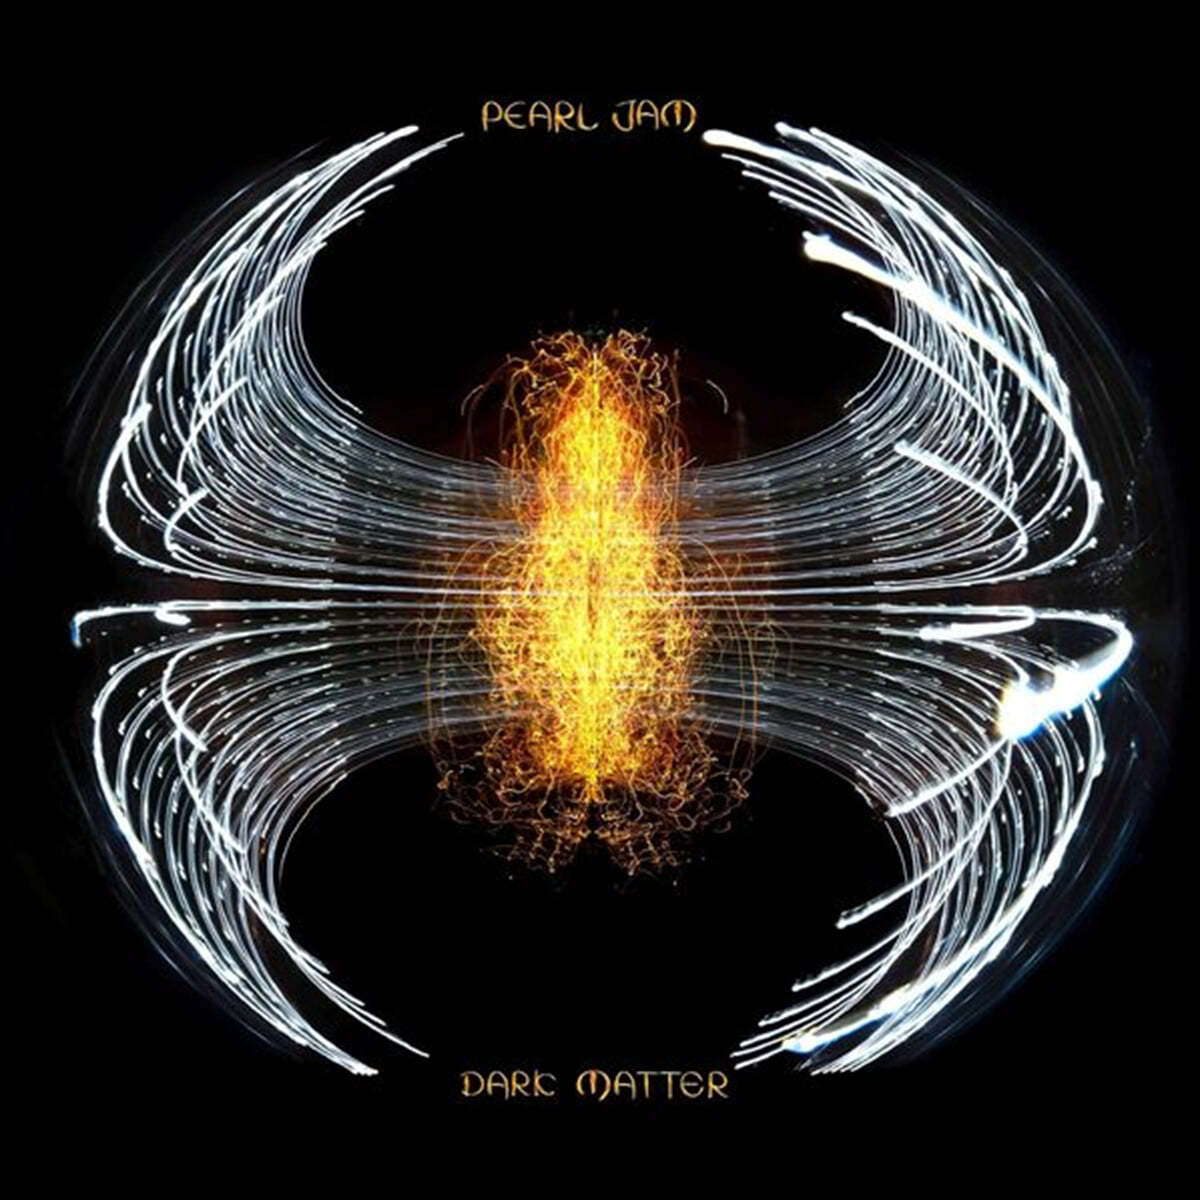 Pearl Jam (펄 잼) - Dark Matter [Deluxe Edition]